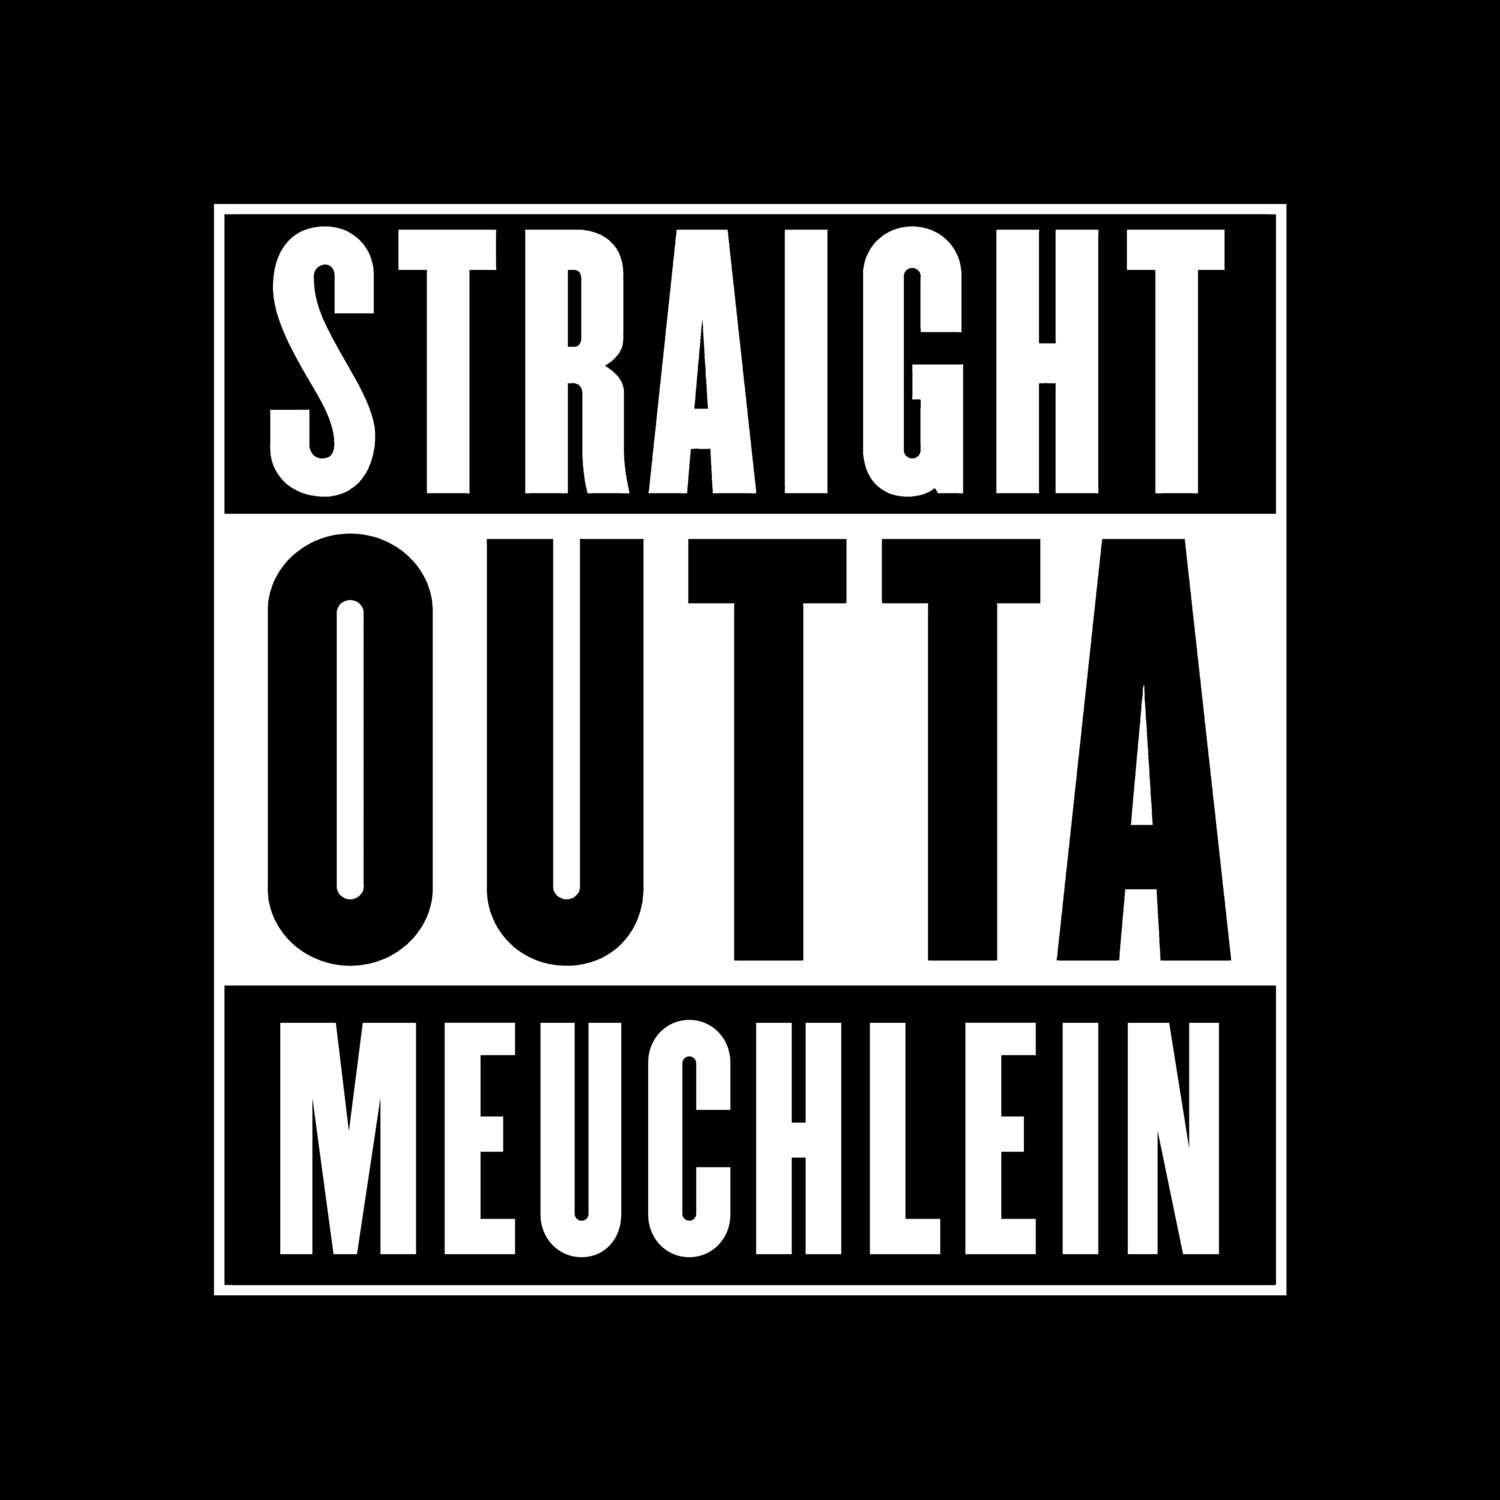 Meuchlein T-Shirt »Straight Outta«